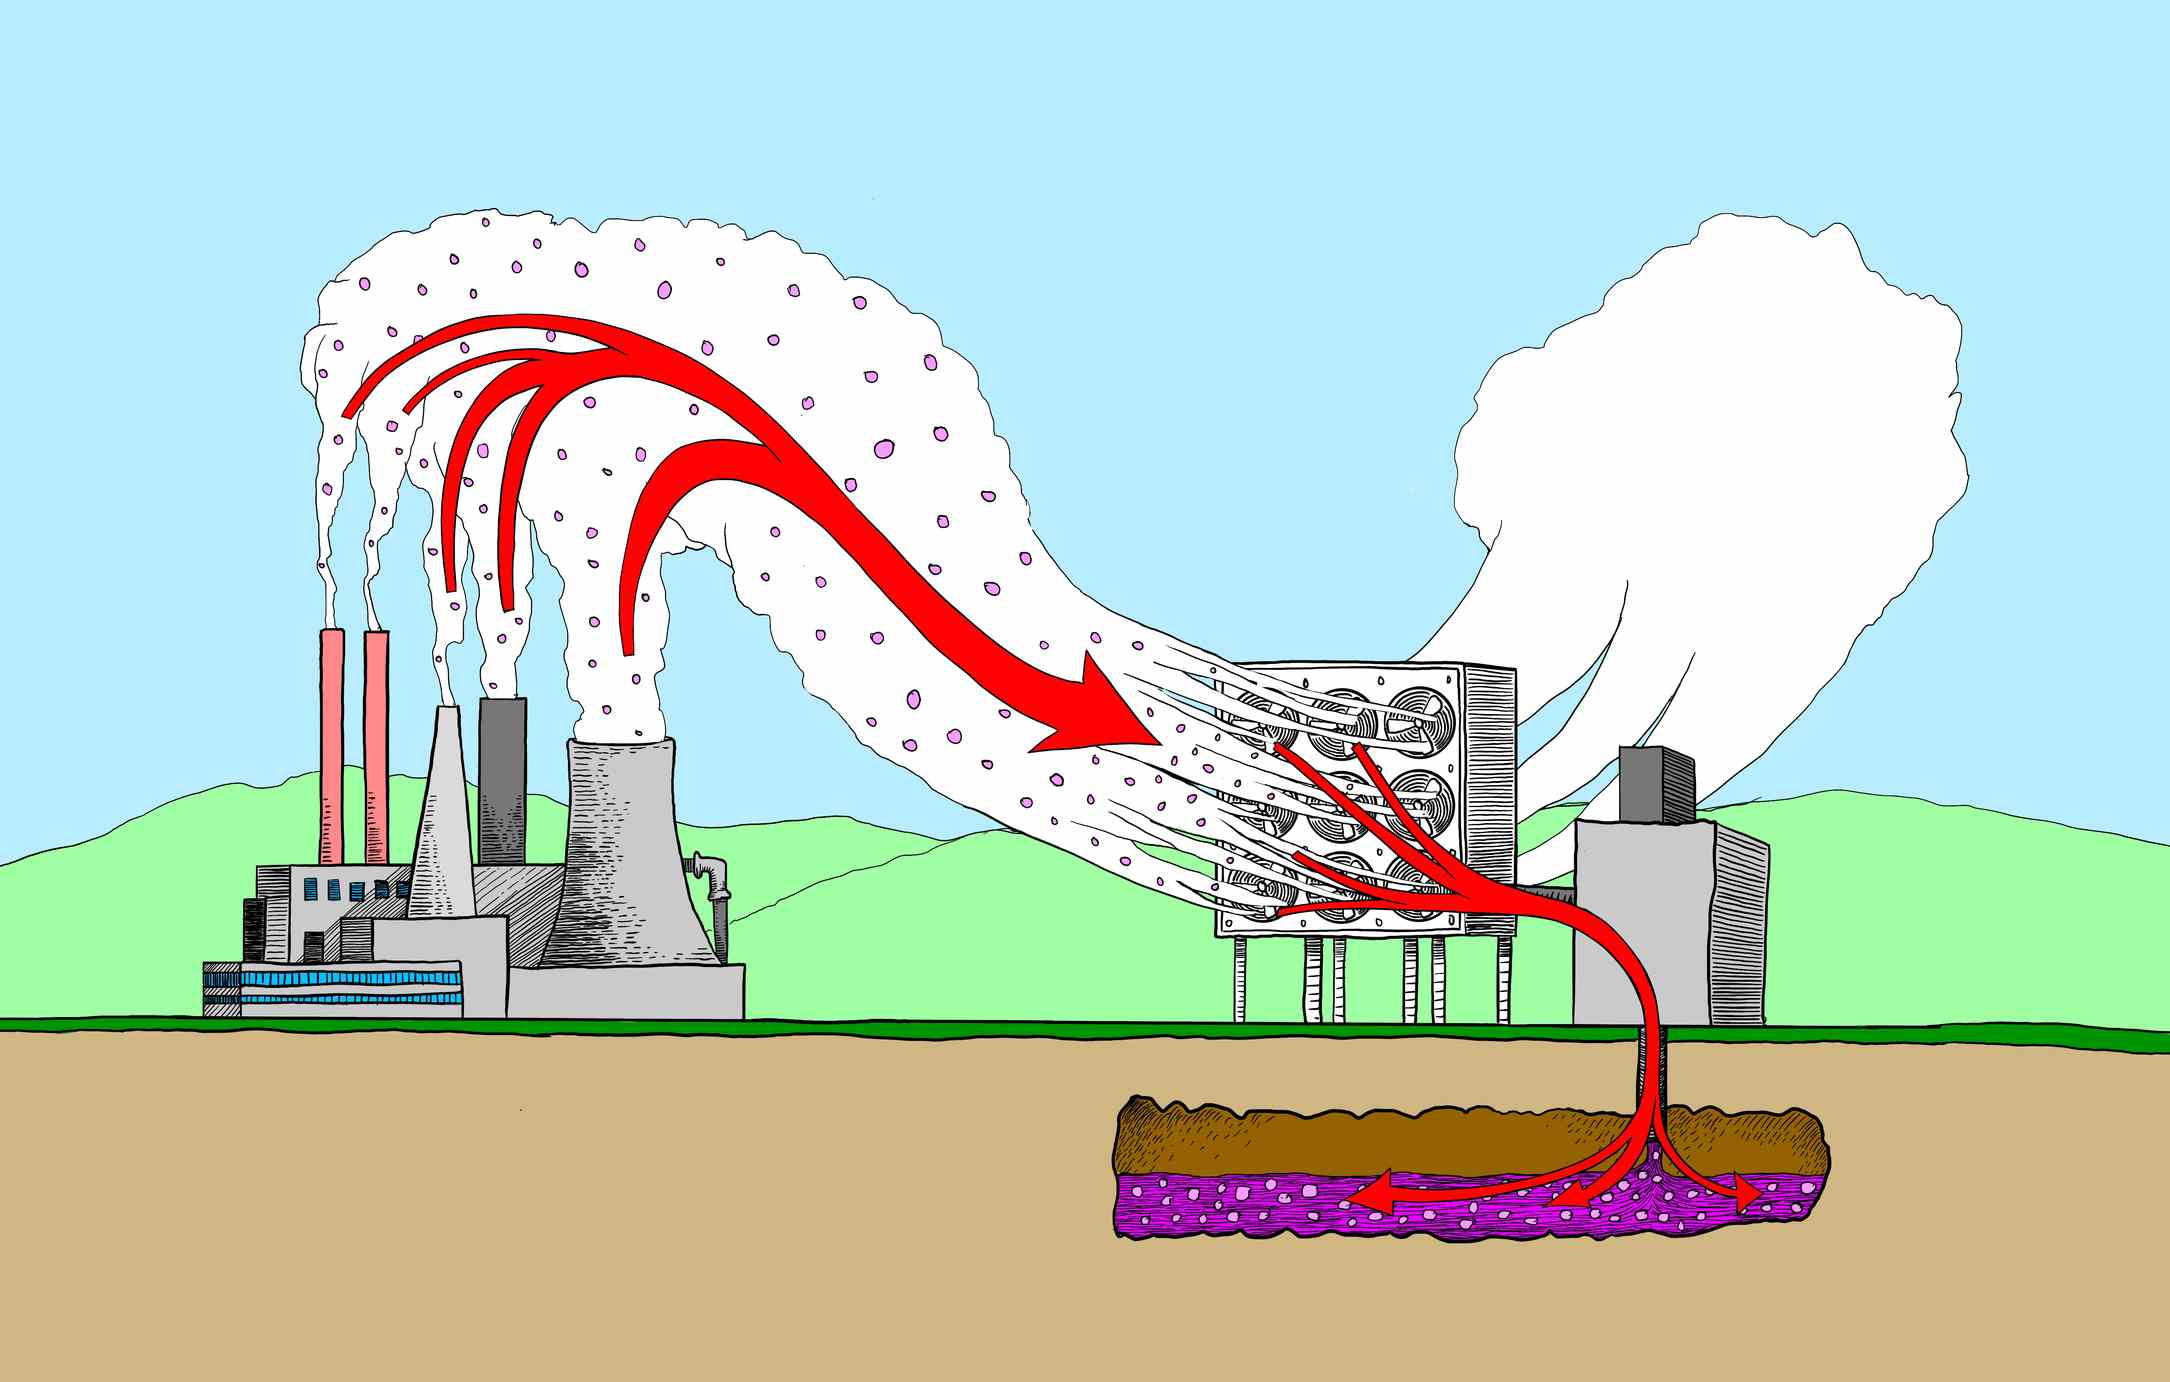 Carbon Capture Technology illustration